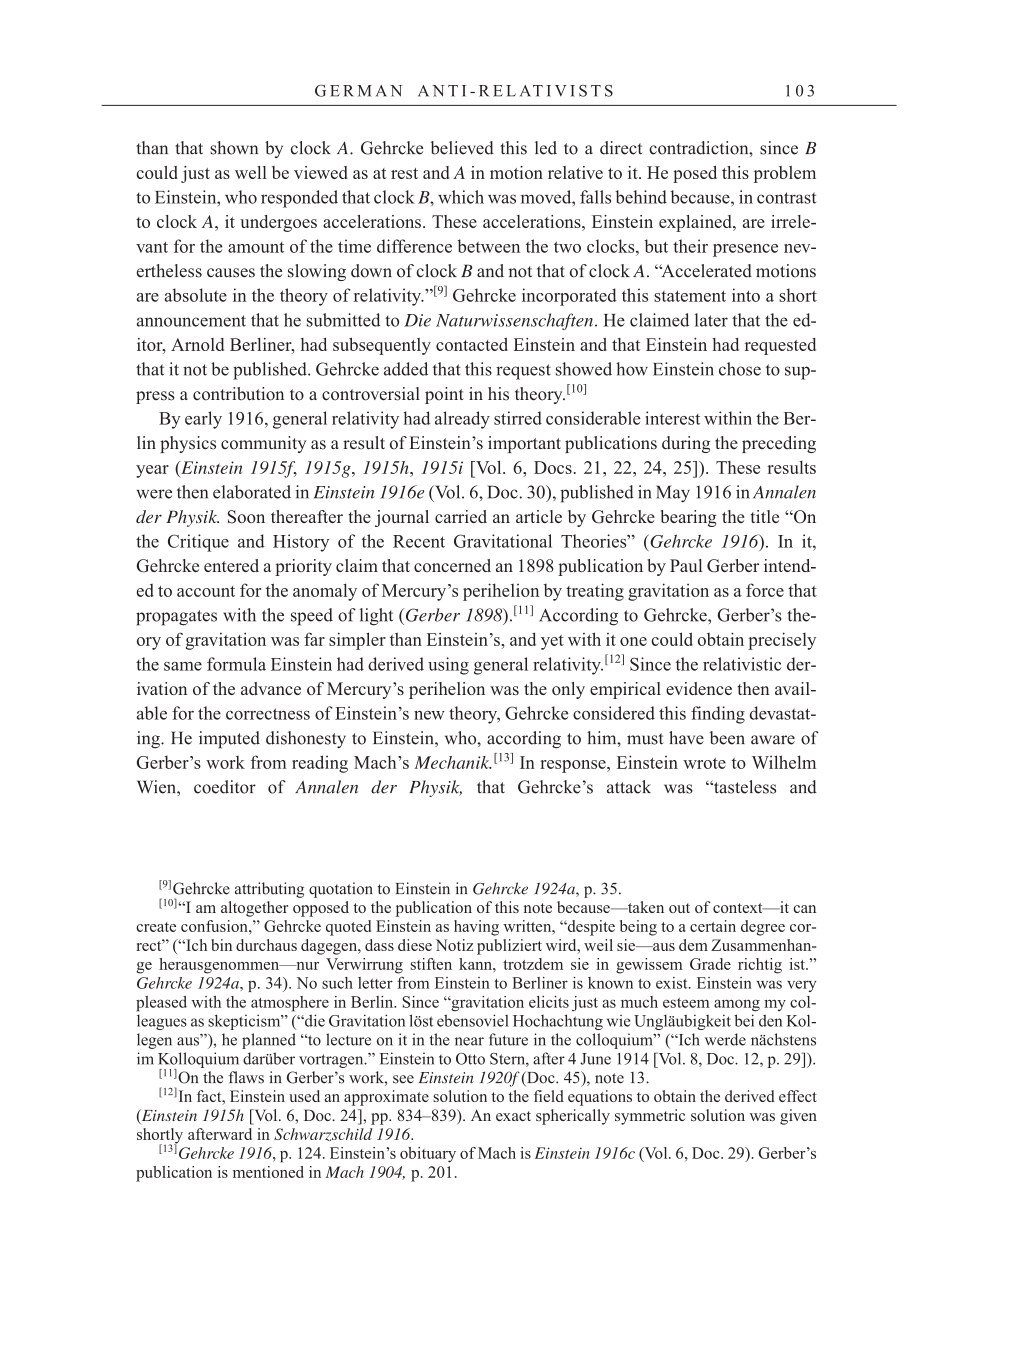 Volume 7: The Berlin Years: Writings, 1918-1921 page 103